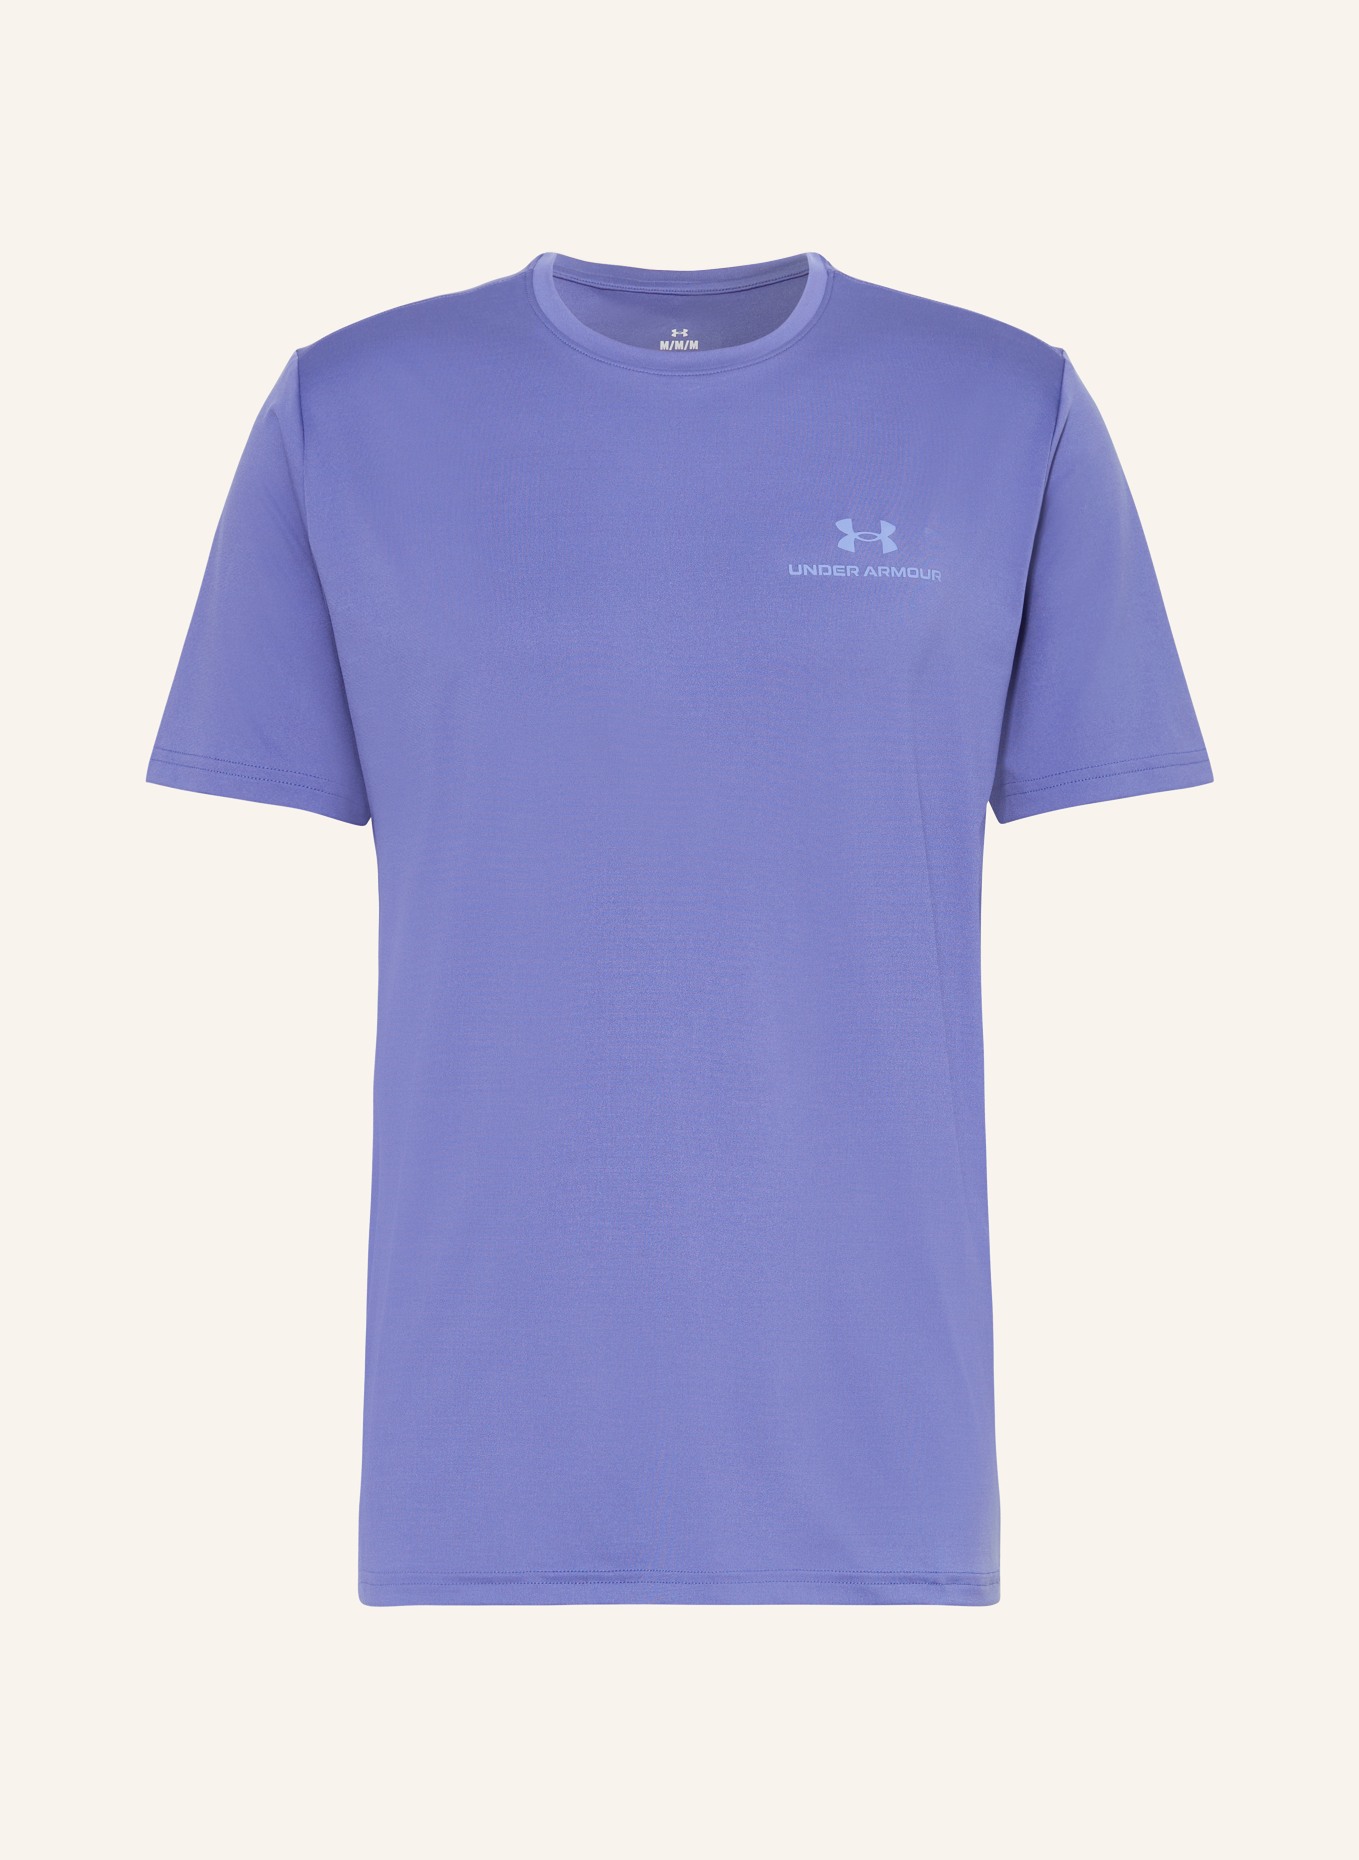 UNDER ARMOUR T-Shirt VANISH ENERGY, Farbe: BLAU (Bild 1)